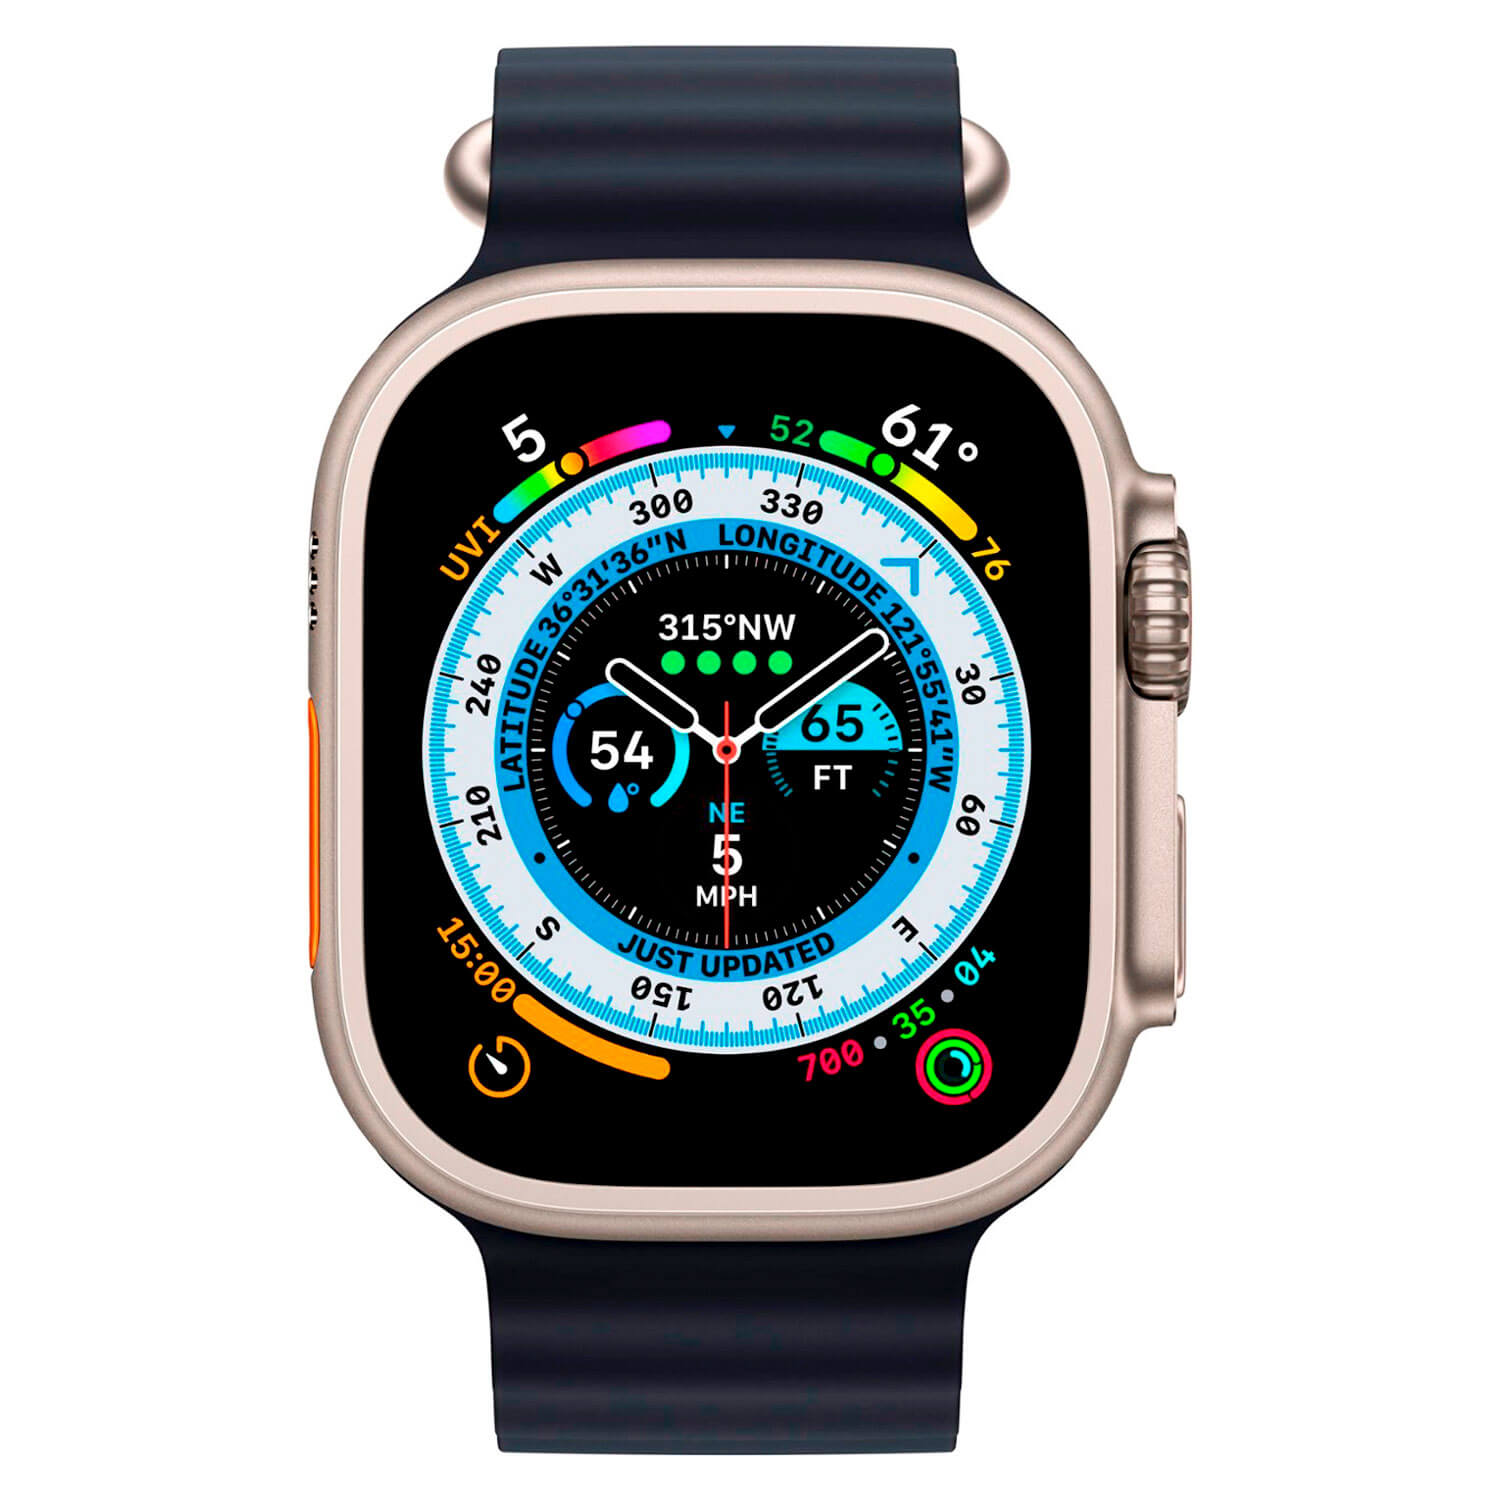 Smartwatch DL9 Ultra Max 49mm - Preto